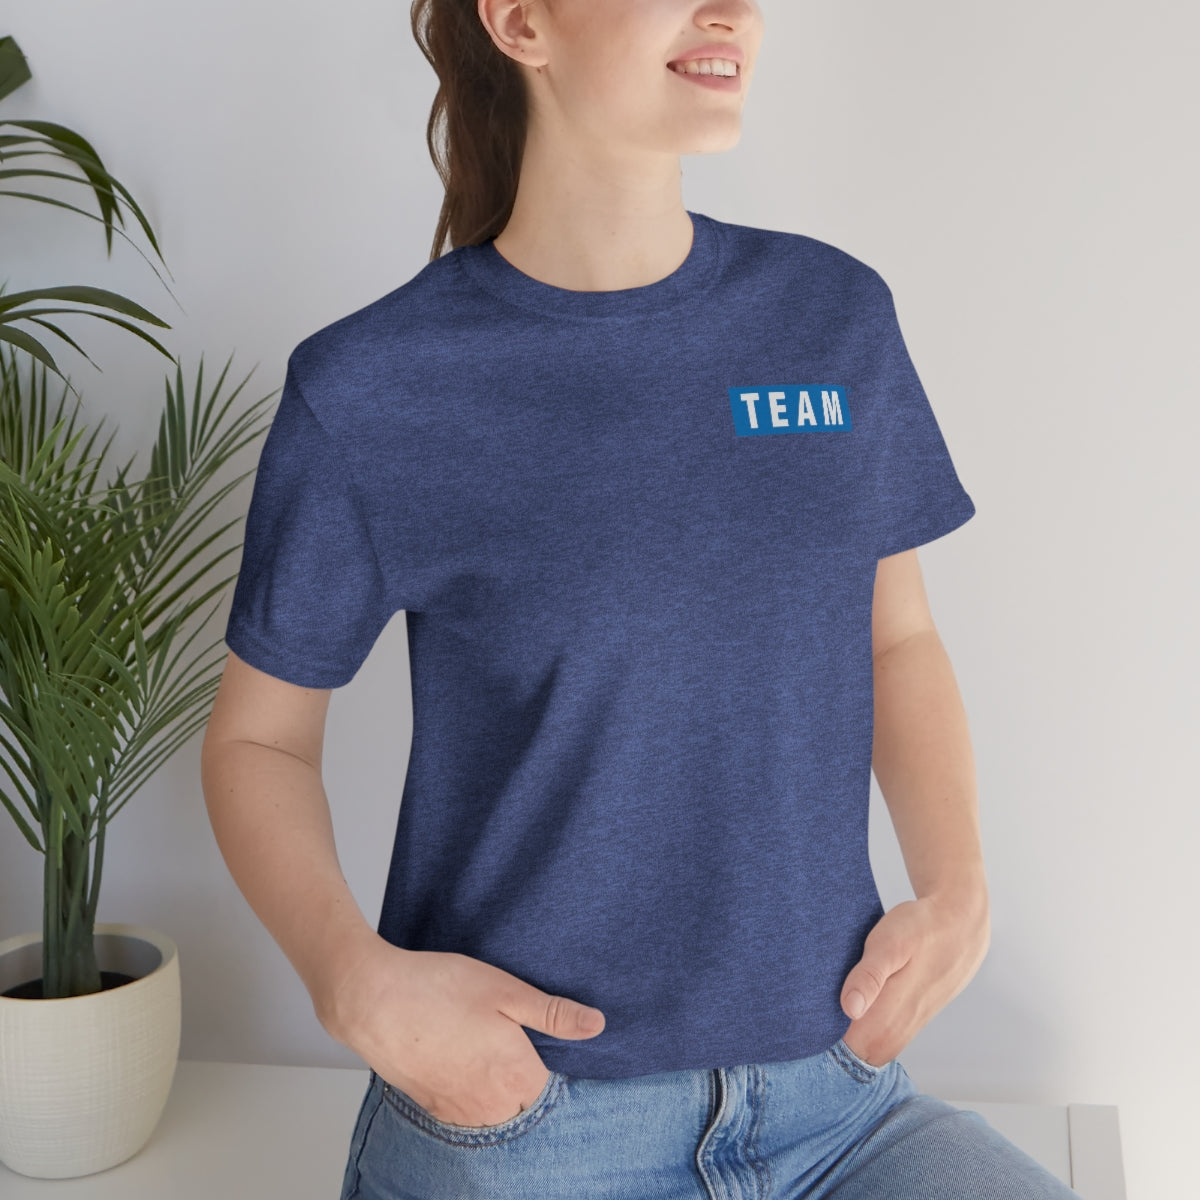 TEAM Short Sleeve T-shirt